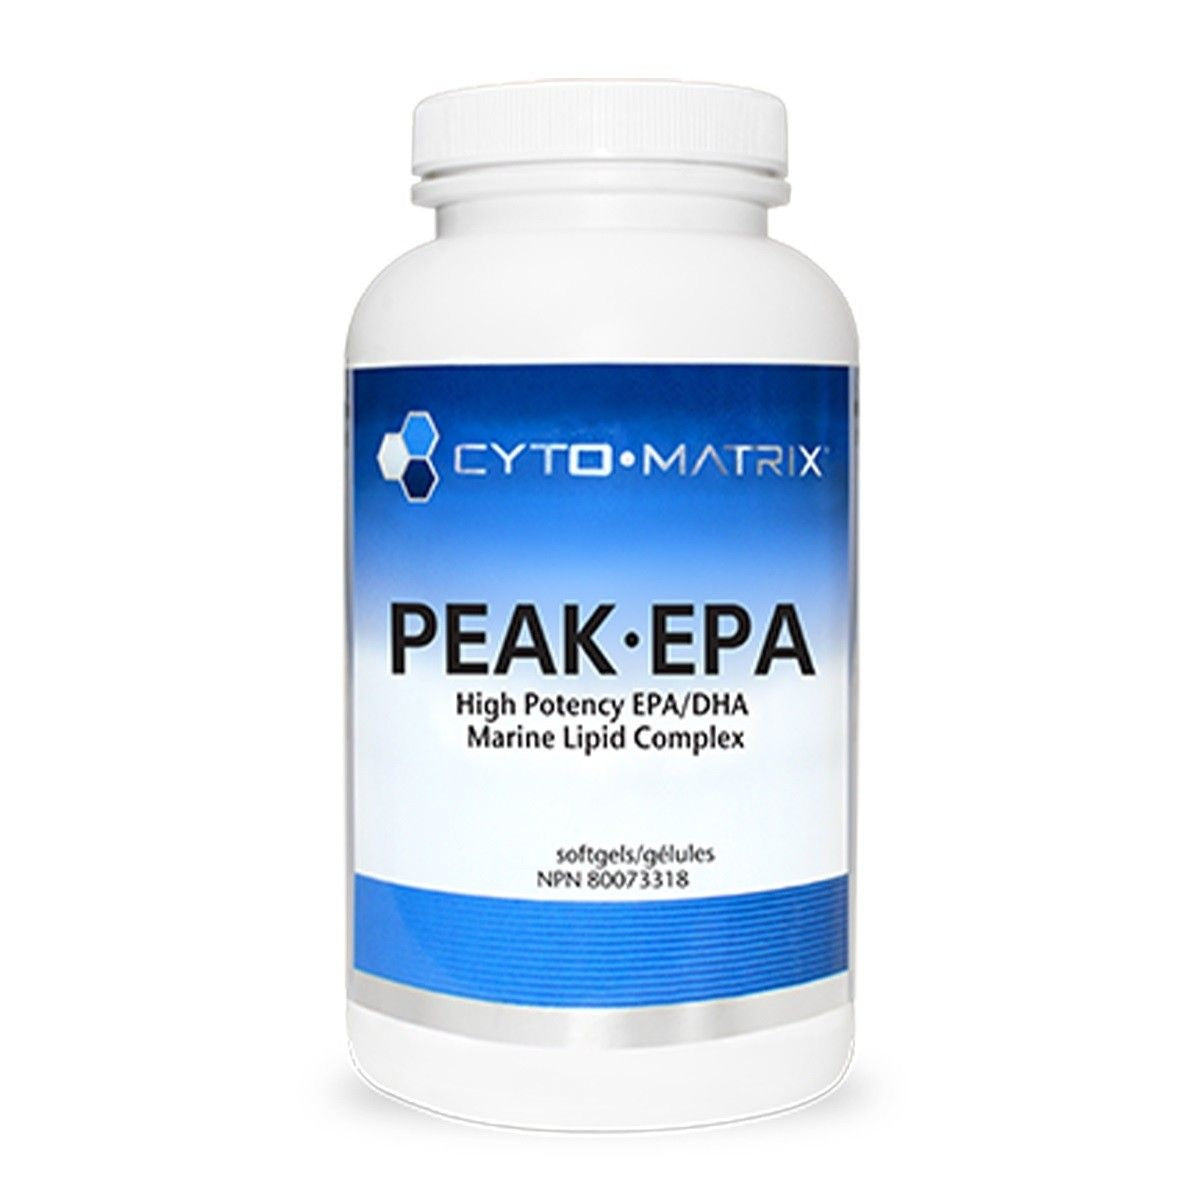 Cyto Matrix Peak EPA 90 soft gel